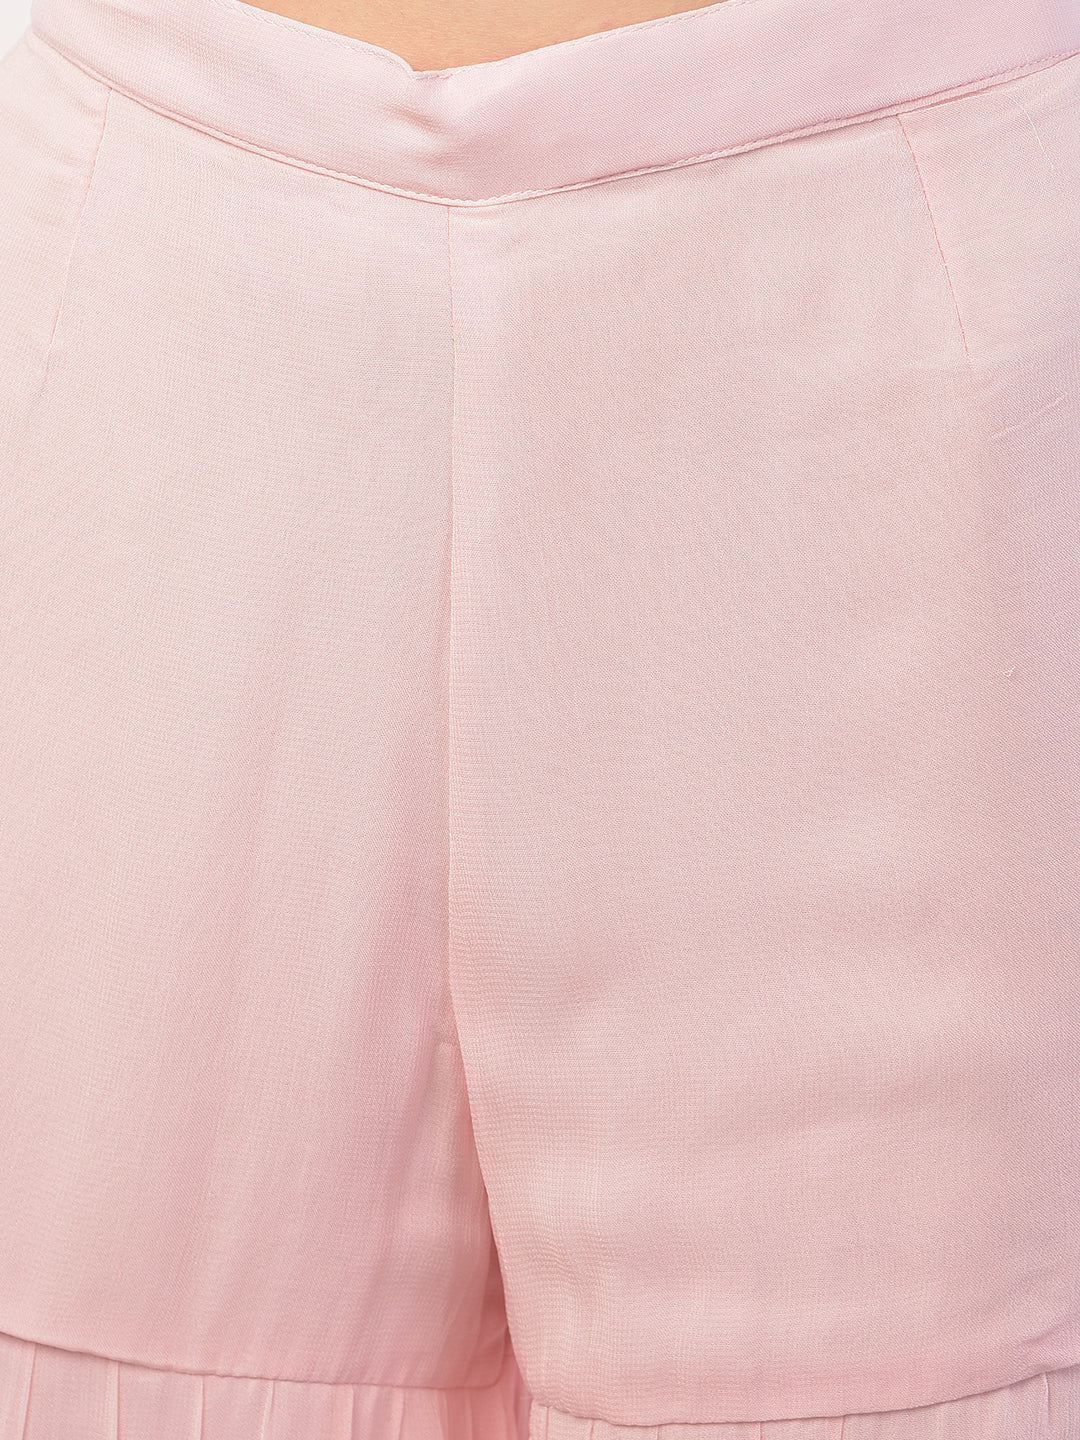 Neeru'S Pink Color, Georgette Fabric Suit-Short Anarkali